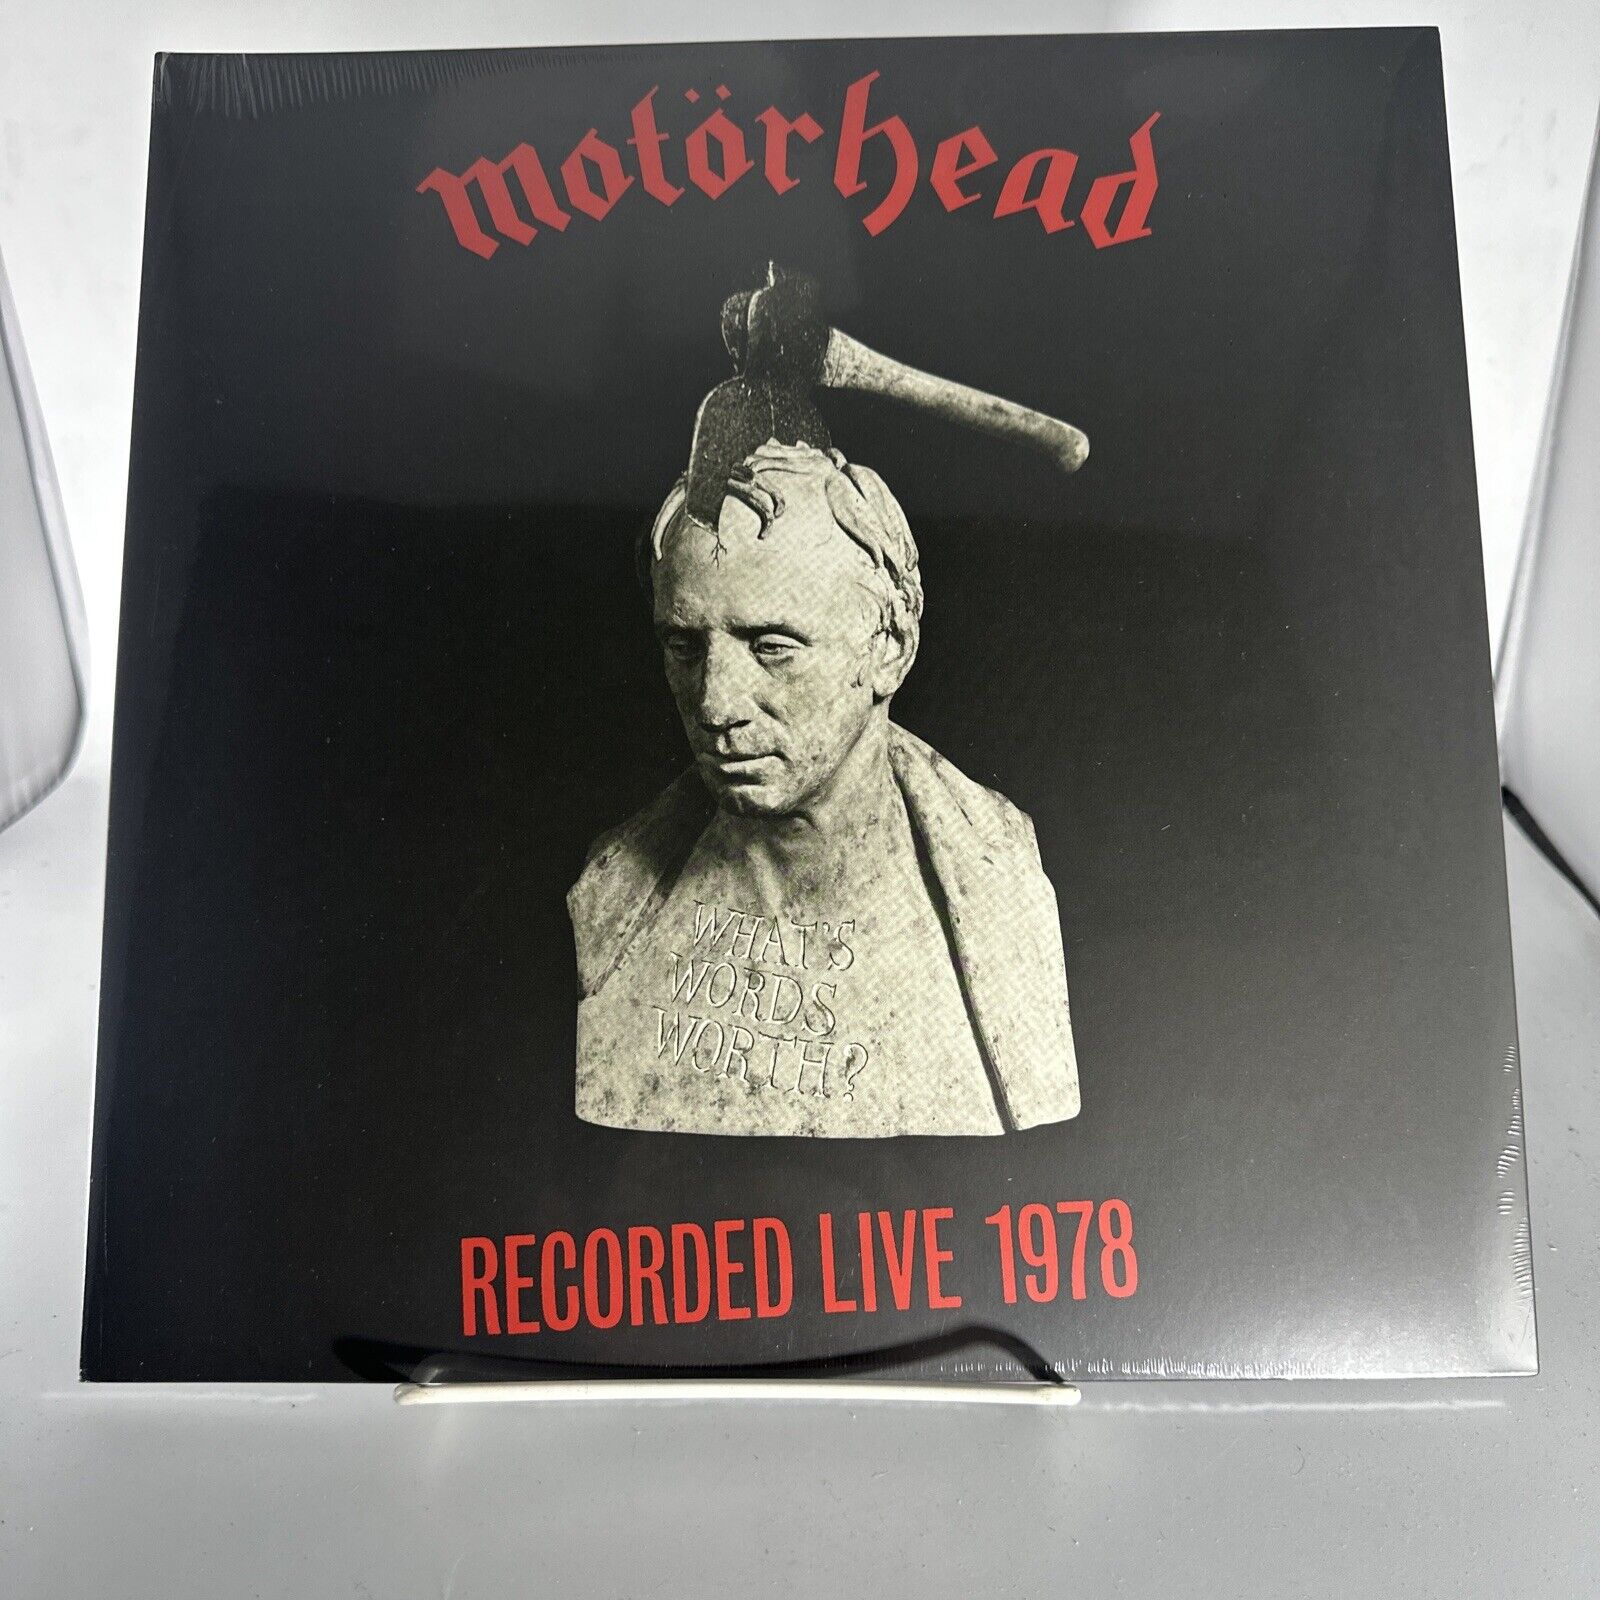 Motörhead - What's Words Worth? - Recorded Live 1978 [VINYL LP]